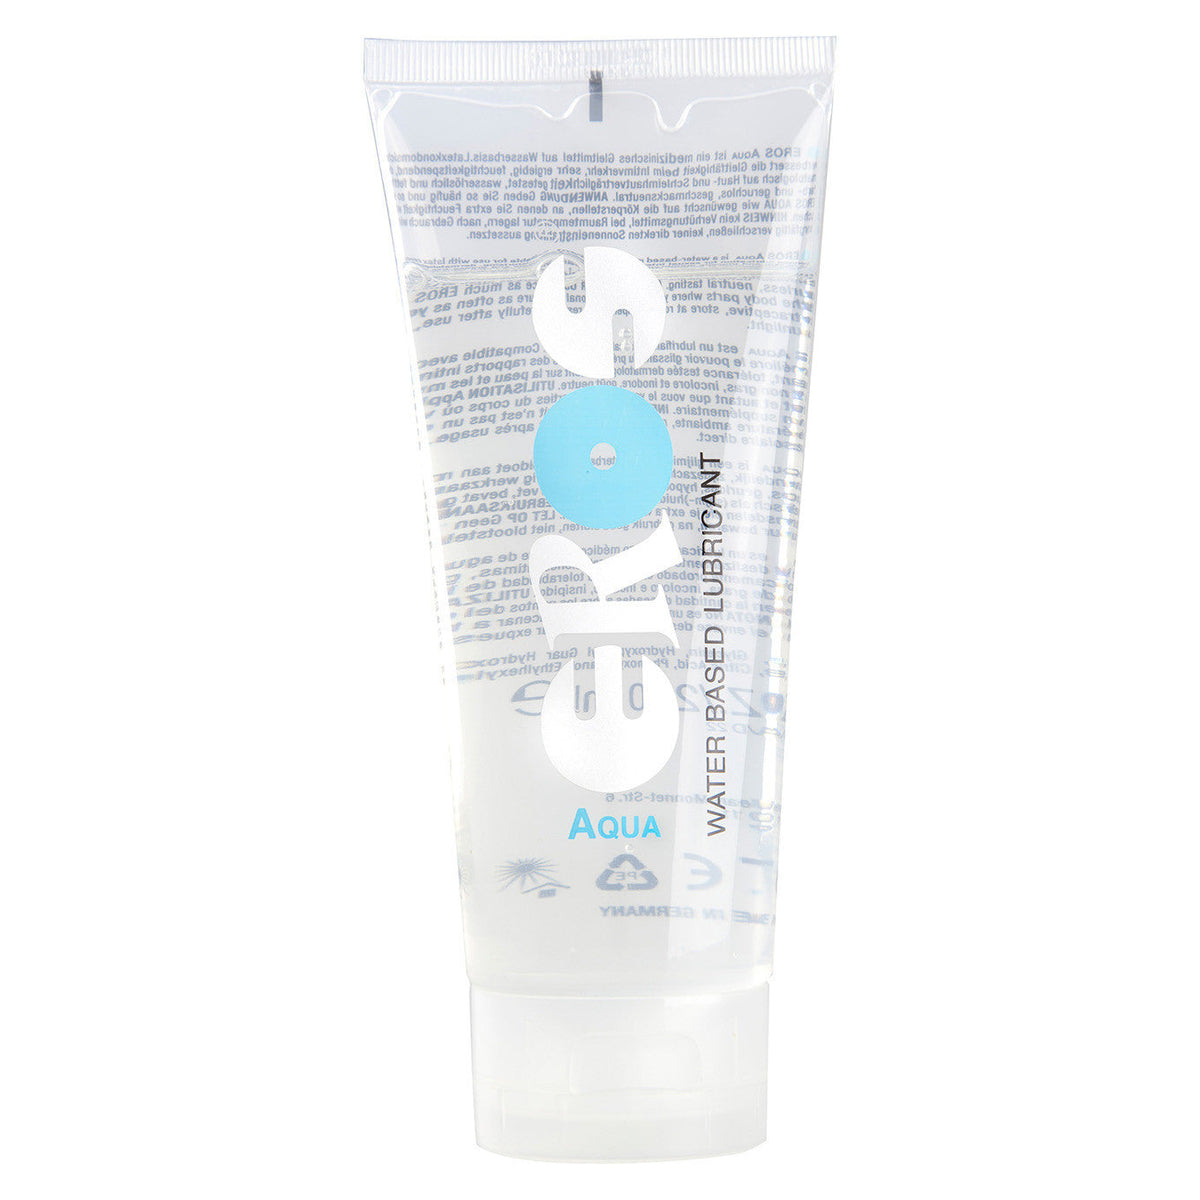 Eros - Aqua Water Based Lubricant 200ml -  Lube (Water Based)  Durio.sg